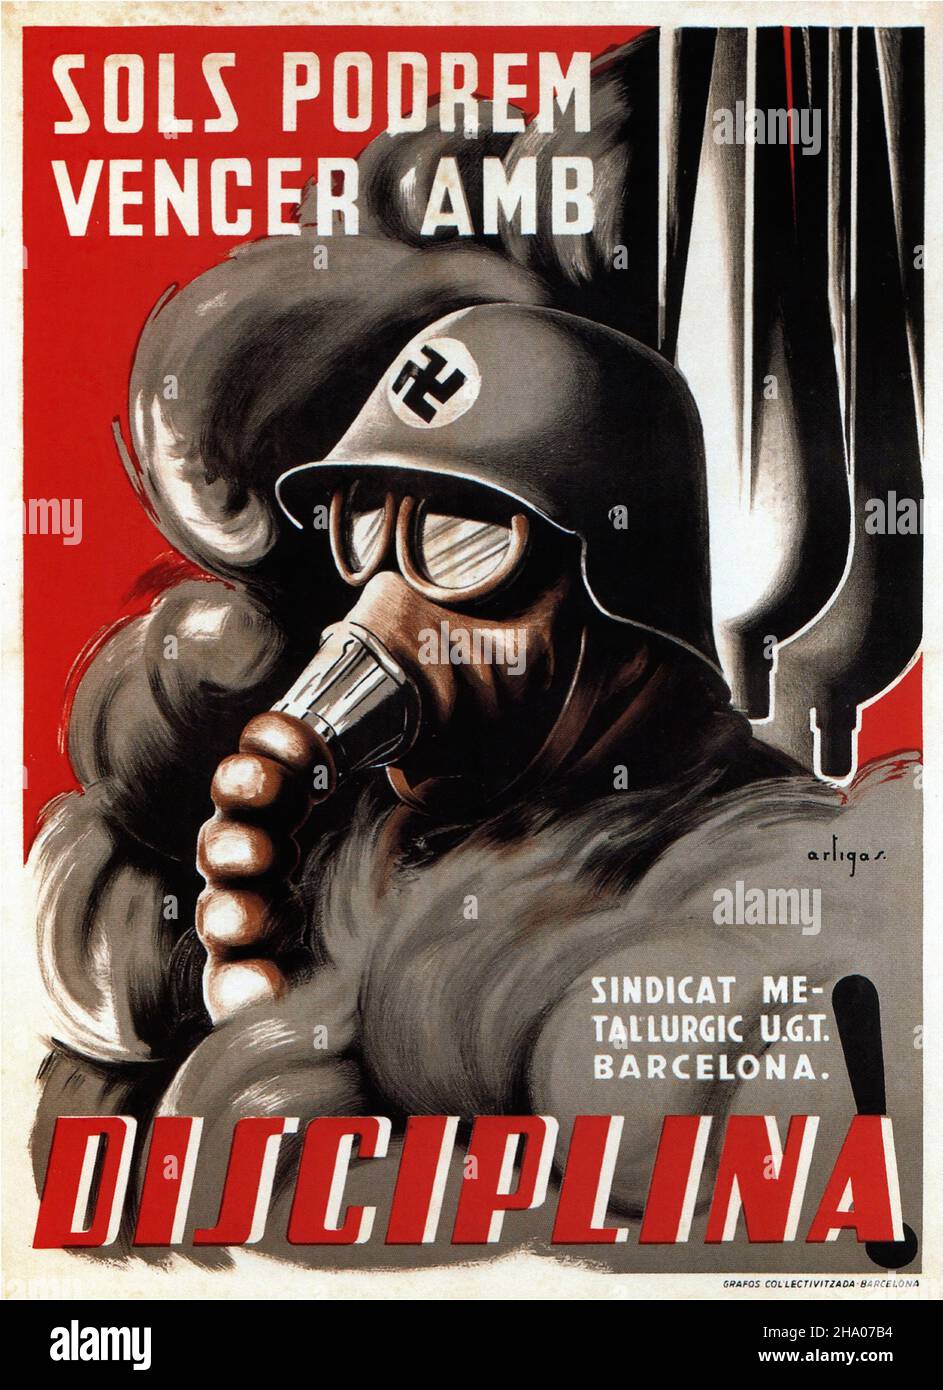 1937 Sols Podrem Vencer Amb disciplinaire - affiche de propagande sur la guerre civile espagnole (Guerra civil Española) Banque D'Images